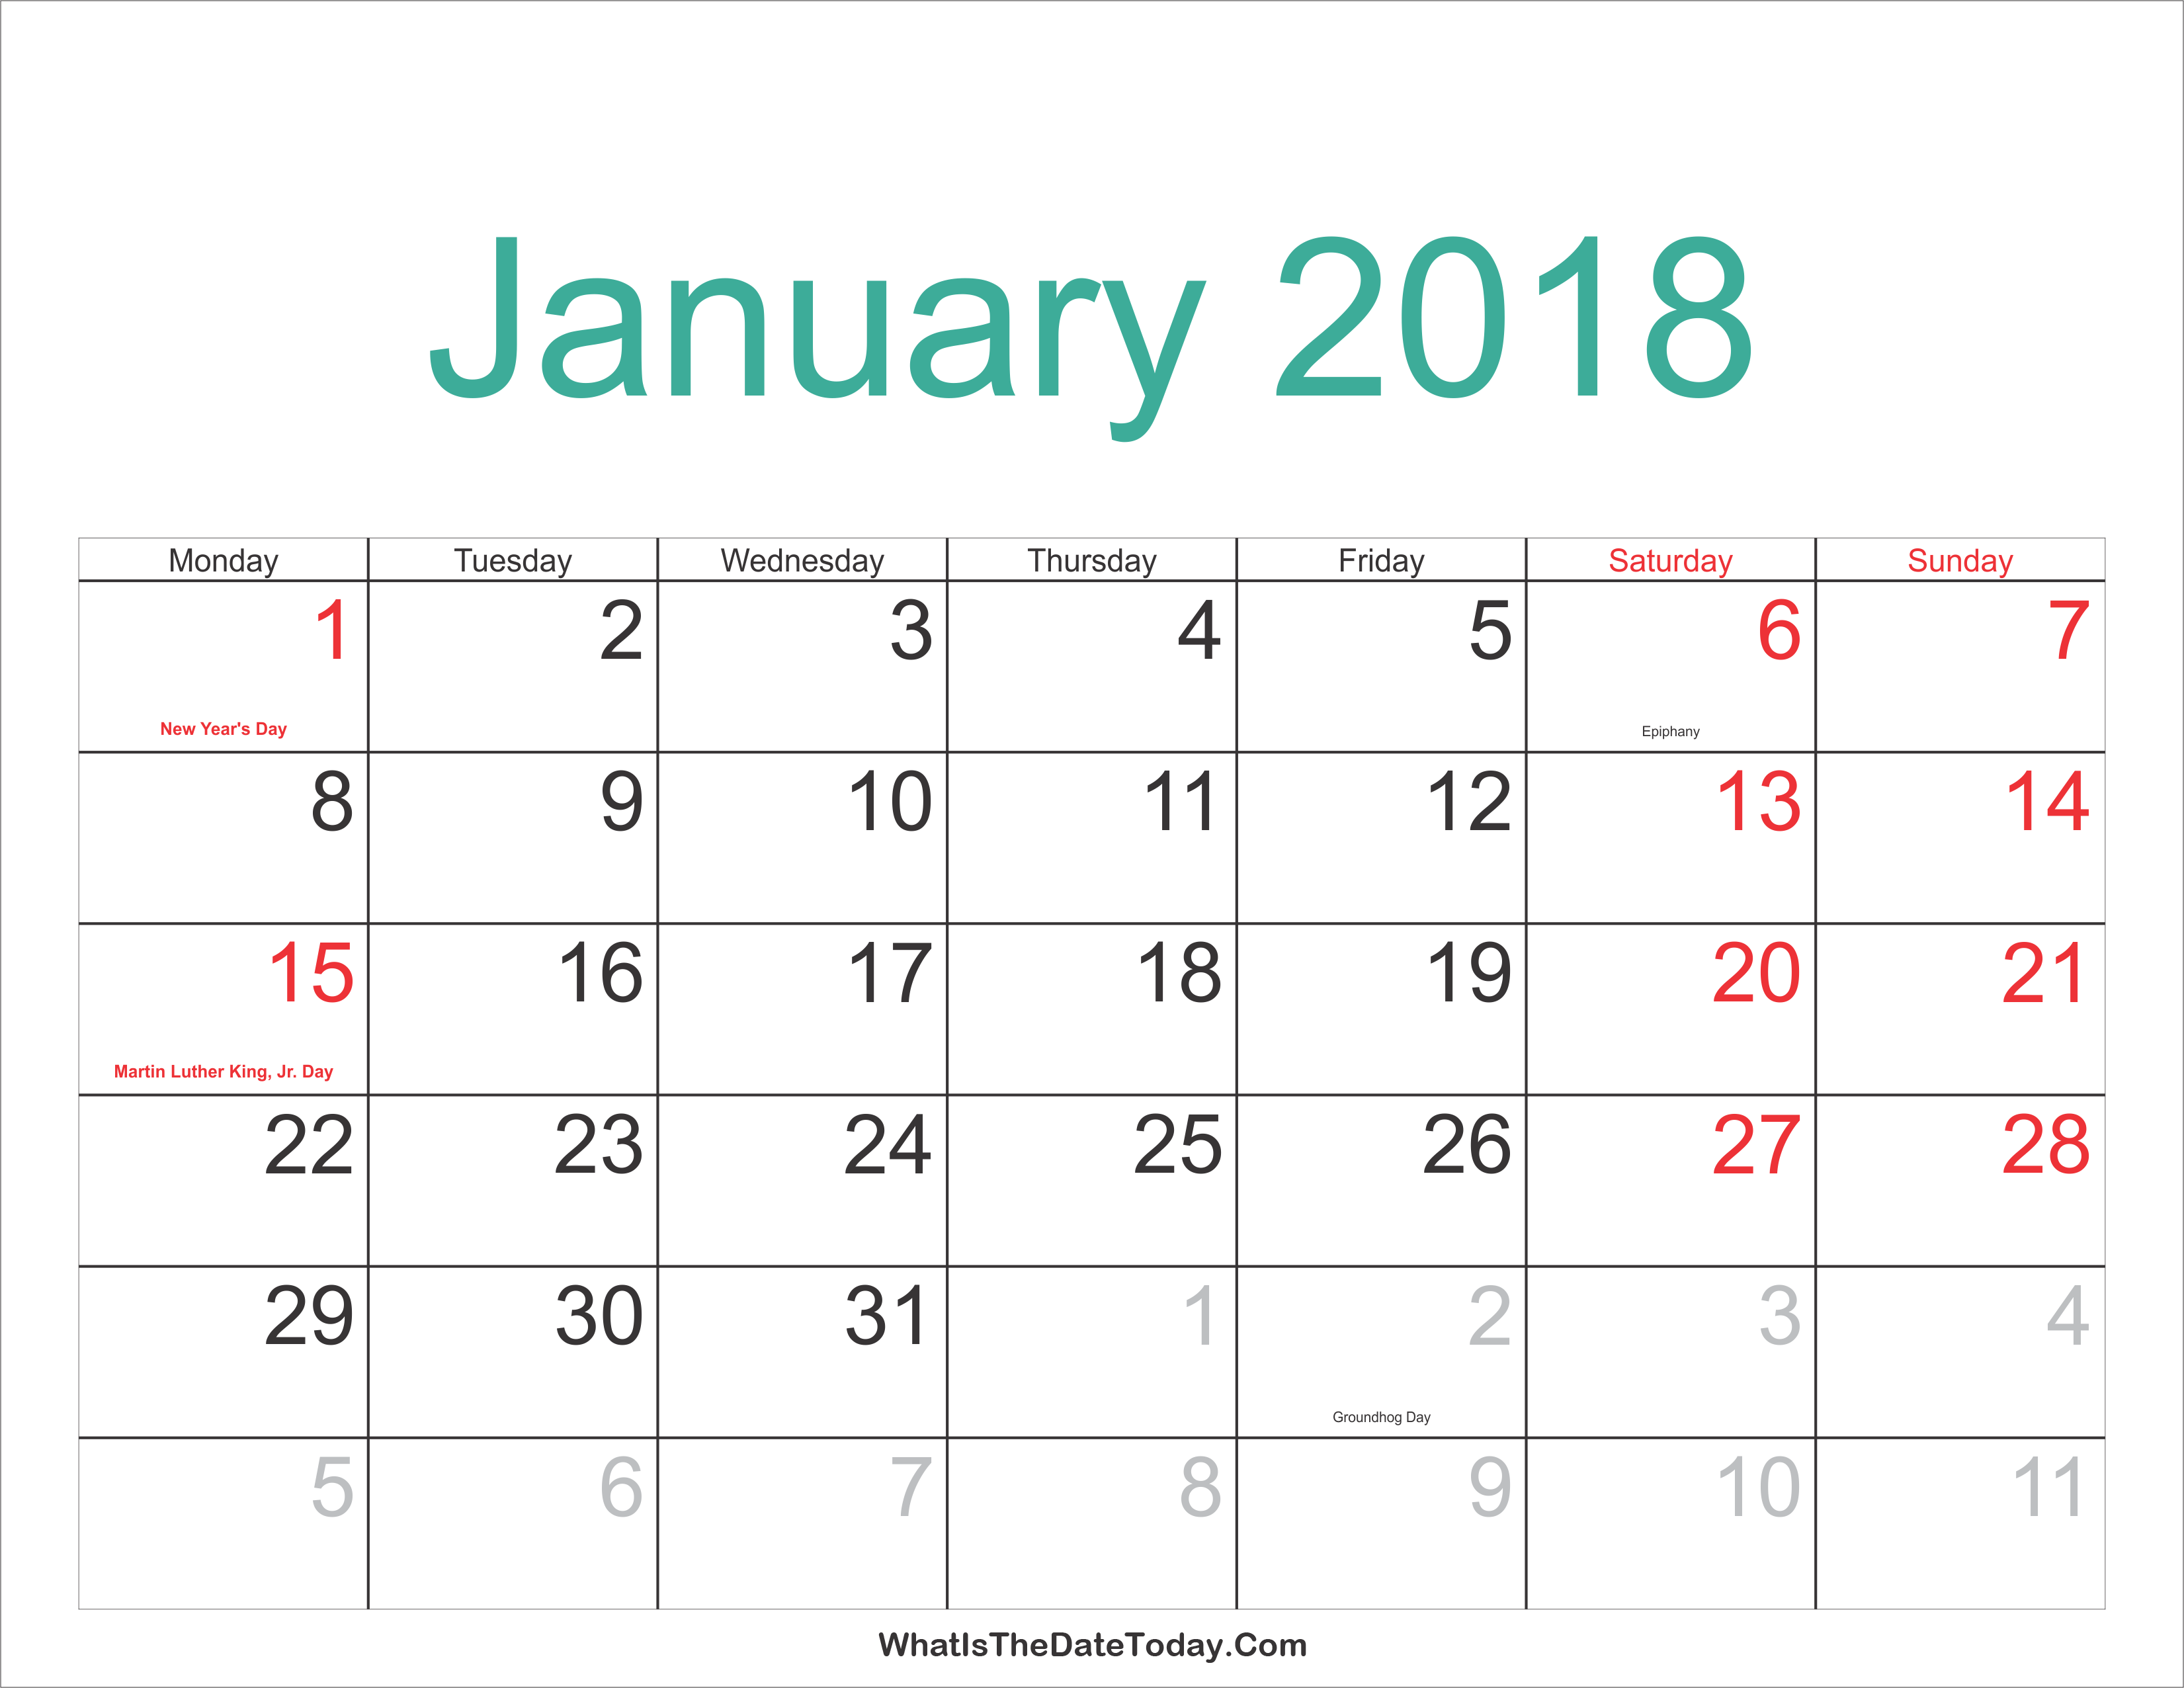 January 2018 Calendar January 2018 Calendar Ybyknx